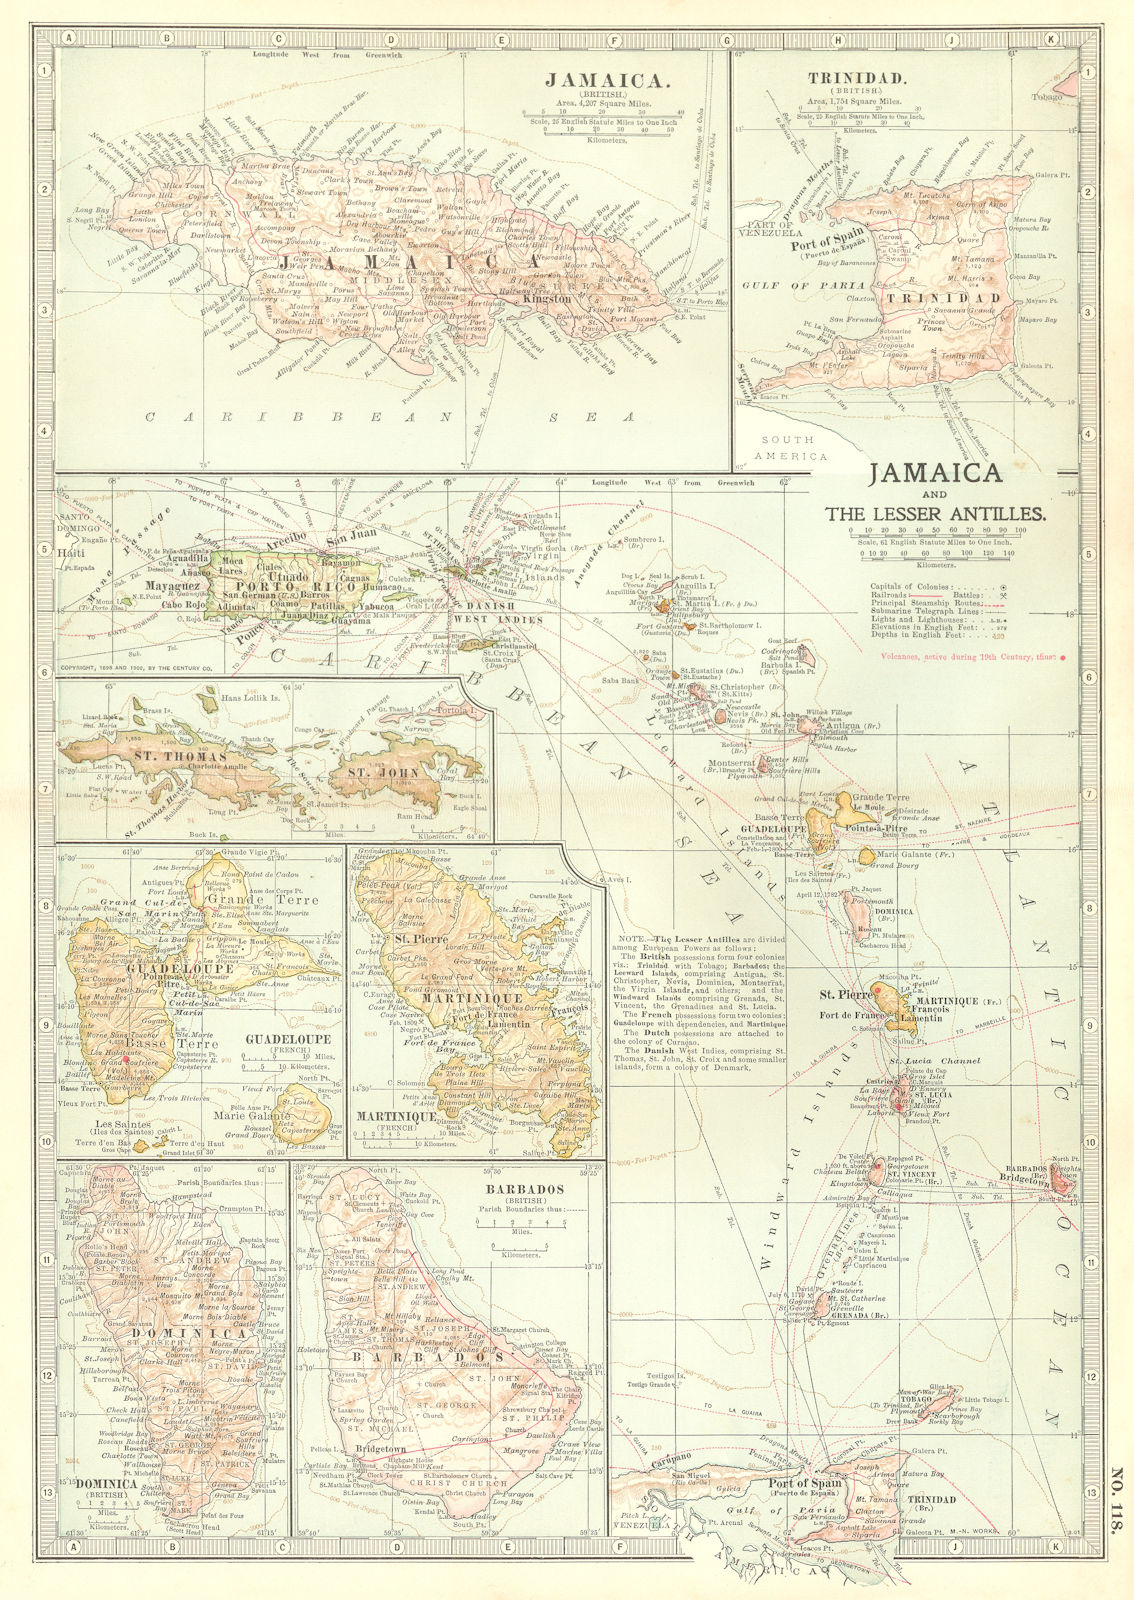 WEST INDIES. Jamaica Barbados BVIs Martinique Trinidad Guadeloupe 1903 old map